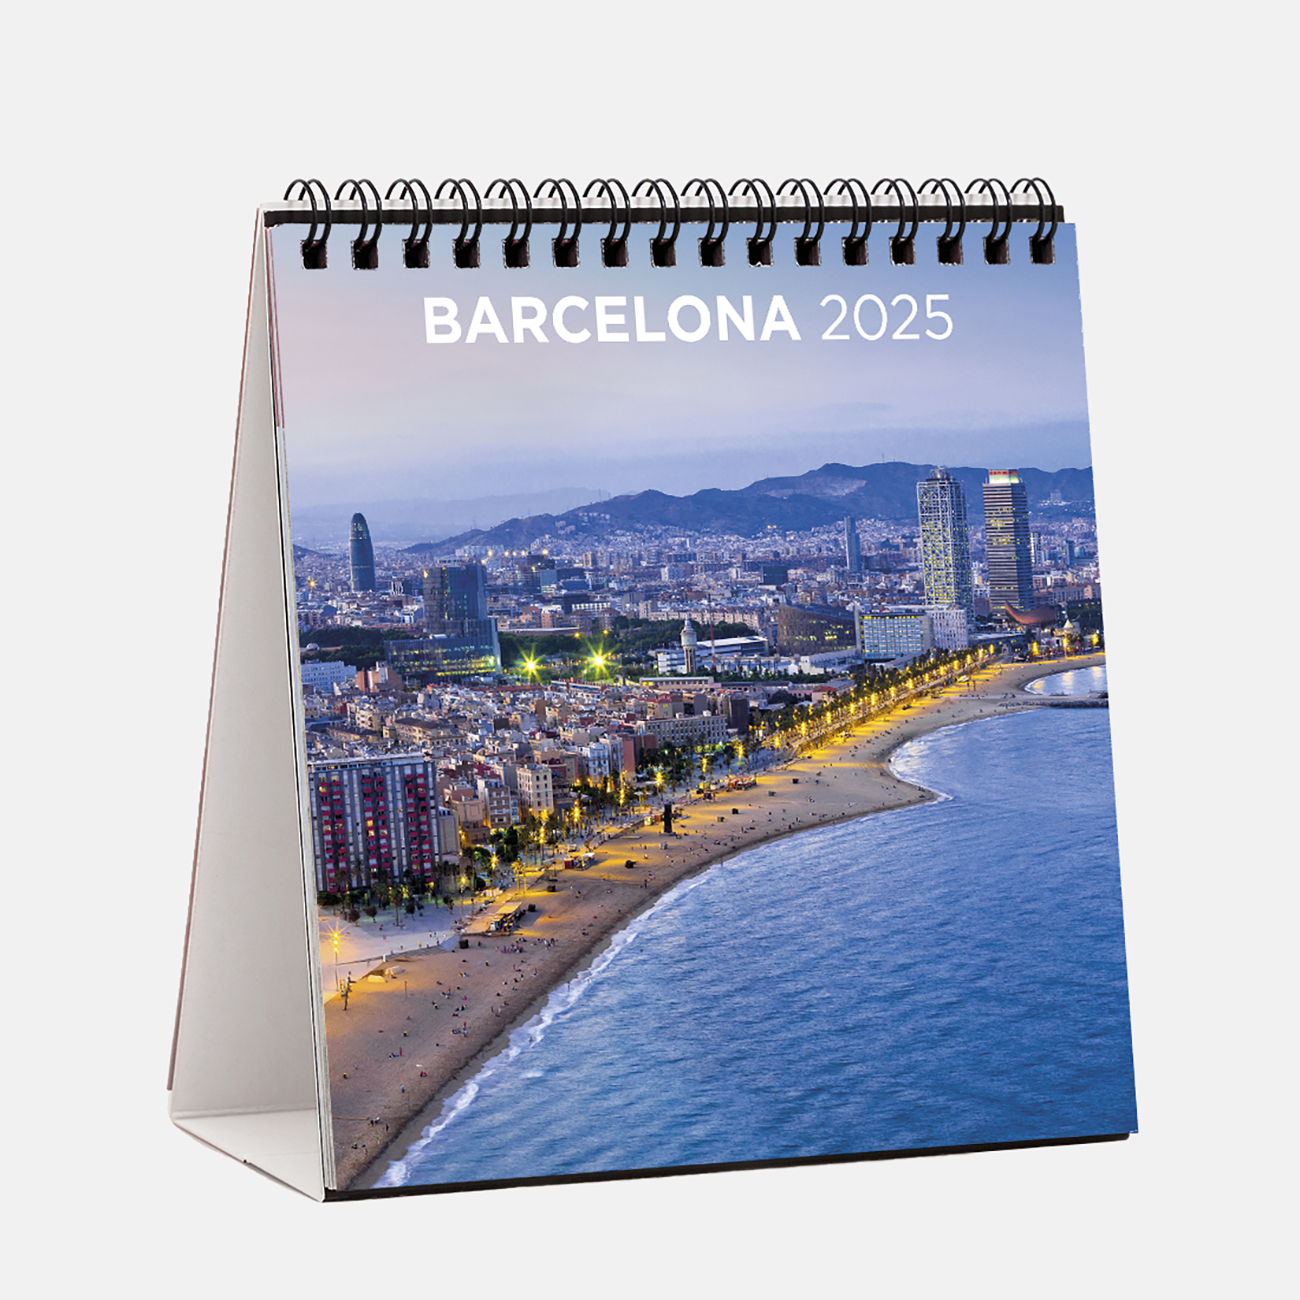 Calendari 2025 Barcelona s25b1 calendario sobremesa 2025 barcelona